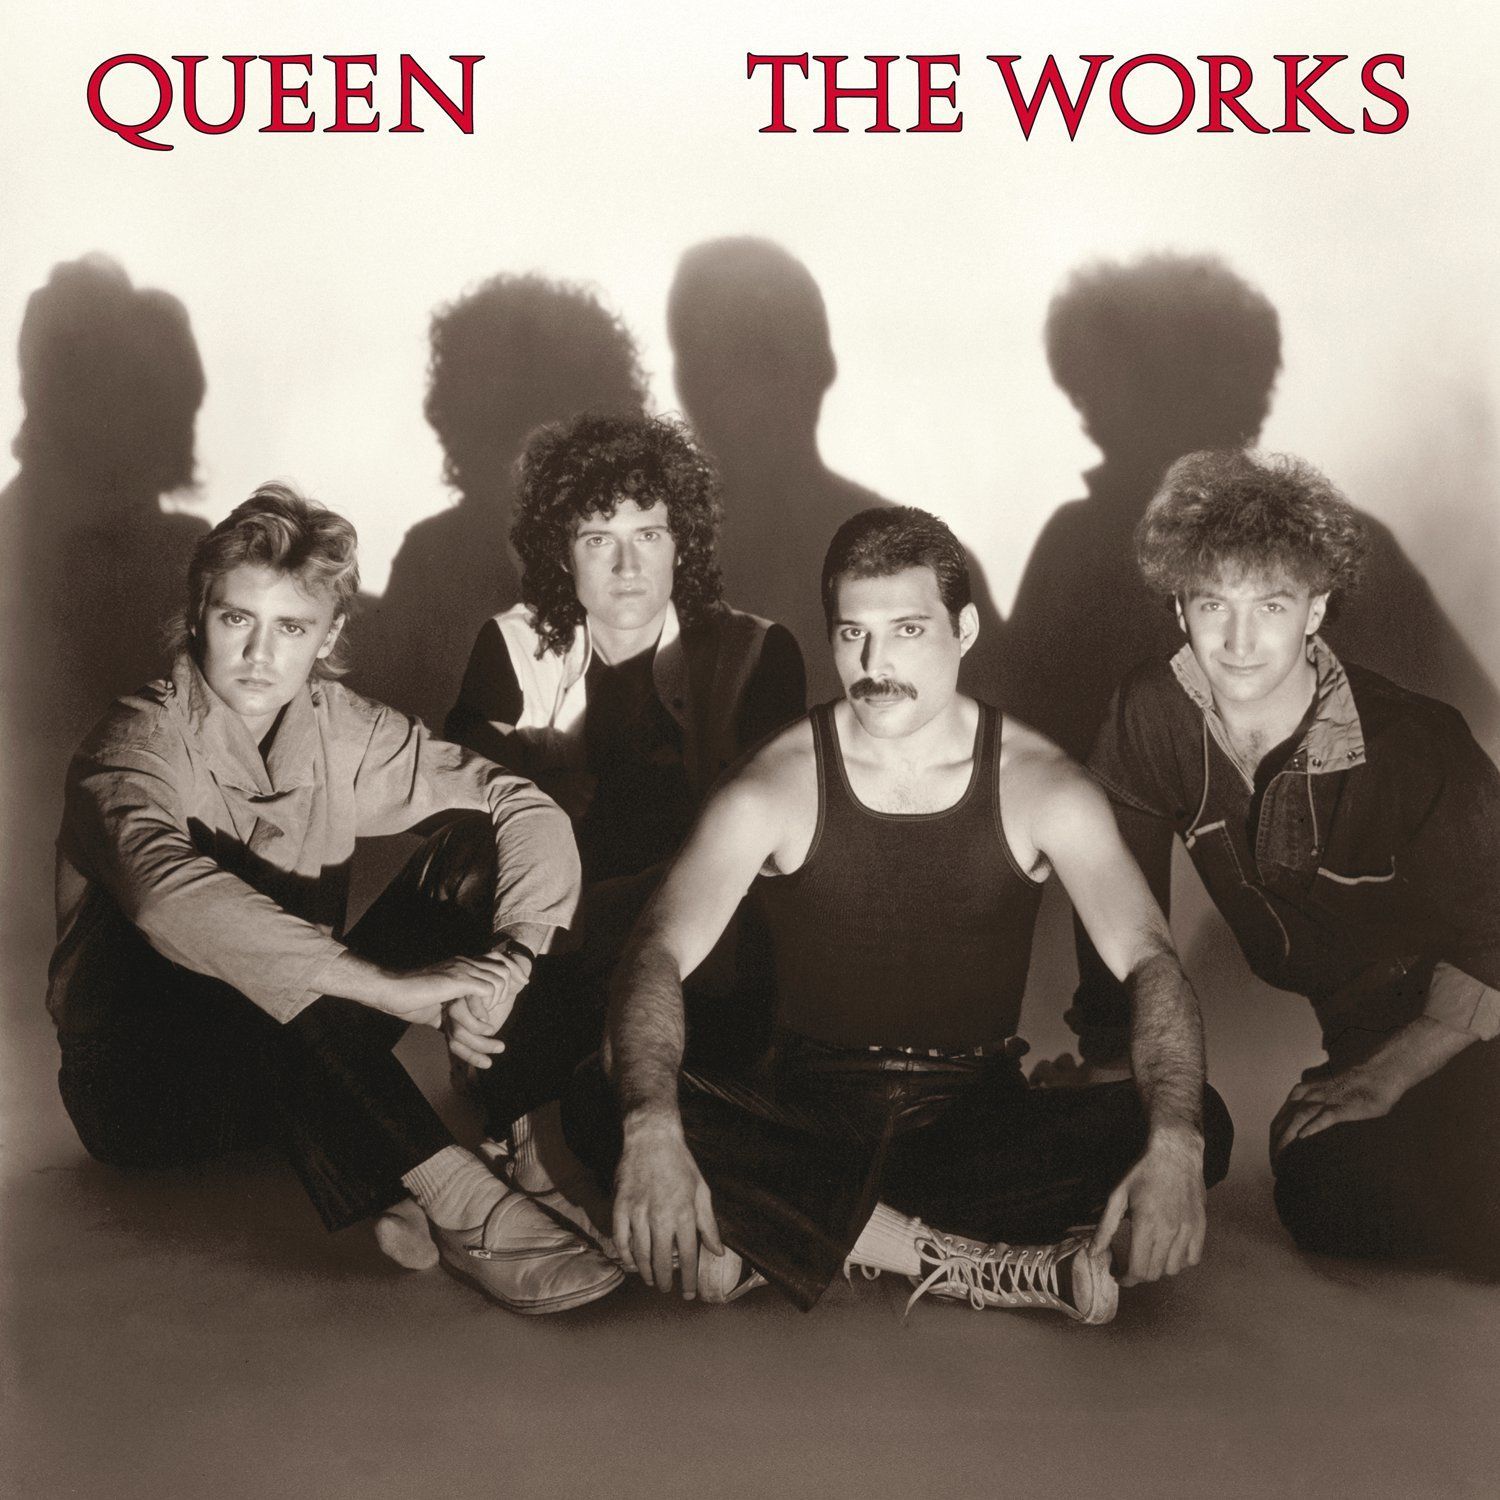 Canciones Traducidas: I Want to Break Free – Queen